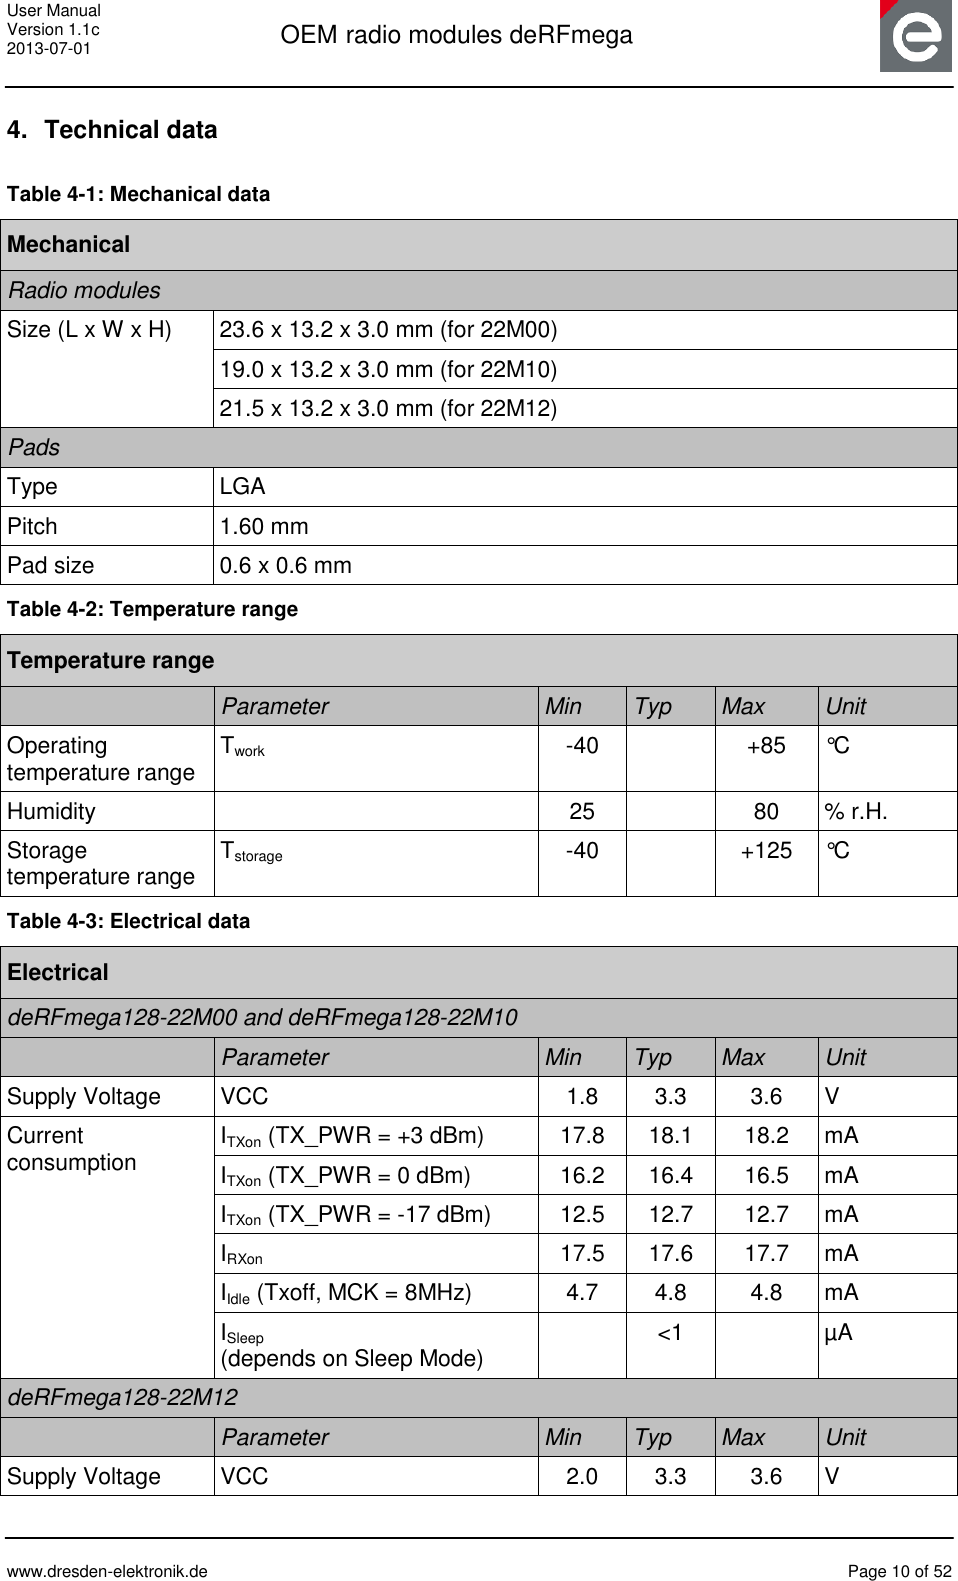 User Manual Version 1.1c 2013-07-01  OEM radio modules deRFmega      www.dresden-elektronik.de  Page 10 of 52  4.  Technical data Table 4-1: Mechanical data Mechanical Radio modules Size (L x W x H) 23.6 x 13.2 x 3.0 mm (for 22M00) 19.0 x 13.2 x 3.0 mm (for 22M10) 21.5 x 13.2 x 3.0 mm (for 22M12) Pads Type LGA Pitch 1.60 mm Pad size 0.6 x 0.6 mm Table 4-2: Temperature range Temperature range  Parameter Min Typ Max Unit Operating temperature range Twork -40  +85 °C Humidity  25  80 % r.H. Storage temperature range Tstorage -40  +125 °C Table 4-3: Electrical data Electrical deRFmega128-22M00 and deRFmega128-22M10  Parameter Min Typ Max Unit Supply Voltage VCC 1.8 3.3 3.6 V Current  consumption  ITXon (TX_PWR = +3 dBm) 17.8 18.1 18.2 mA ITXon (TX_PWR = 0 dBm) 16.2 16.4 16.5 mA ITXon (TX_PWR = -17 dBm) 12.5 12.7 12.7 mA IRXon 17.5 17.6 17.7 mA IIdle (Txoff, MCK = 8MHz) 4.7 4.8 4.8 mA ISleep  (depends on Sleep Mode)  &lt;1  µA deRFmega128-22M12  Parameter Min Typ Max Unit Supply Voltage VCC 2.0 3.3 3.6 V 